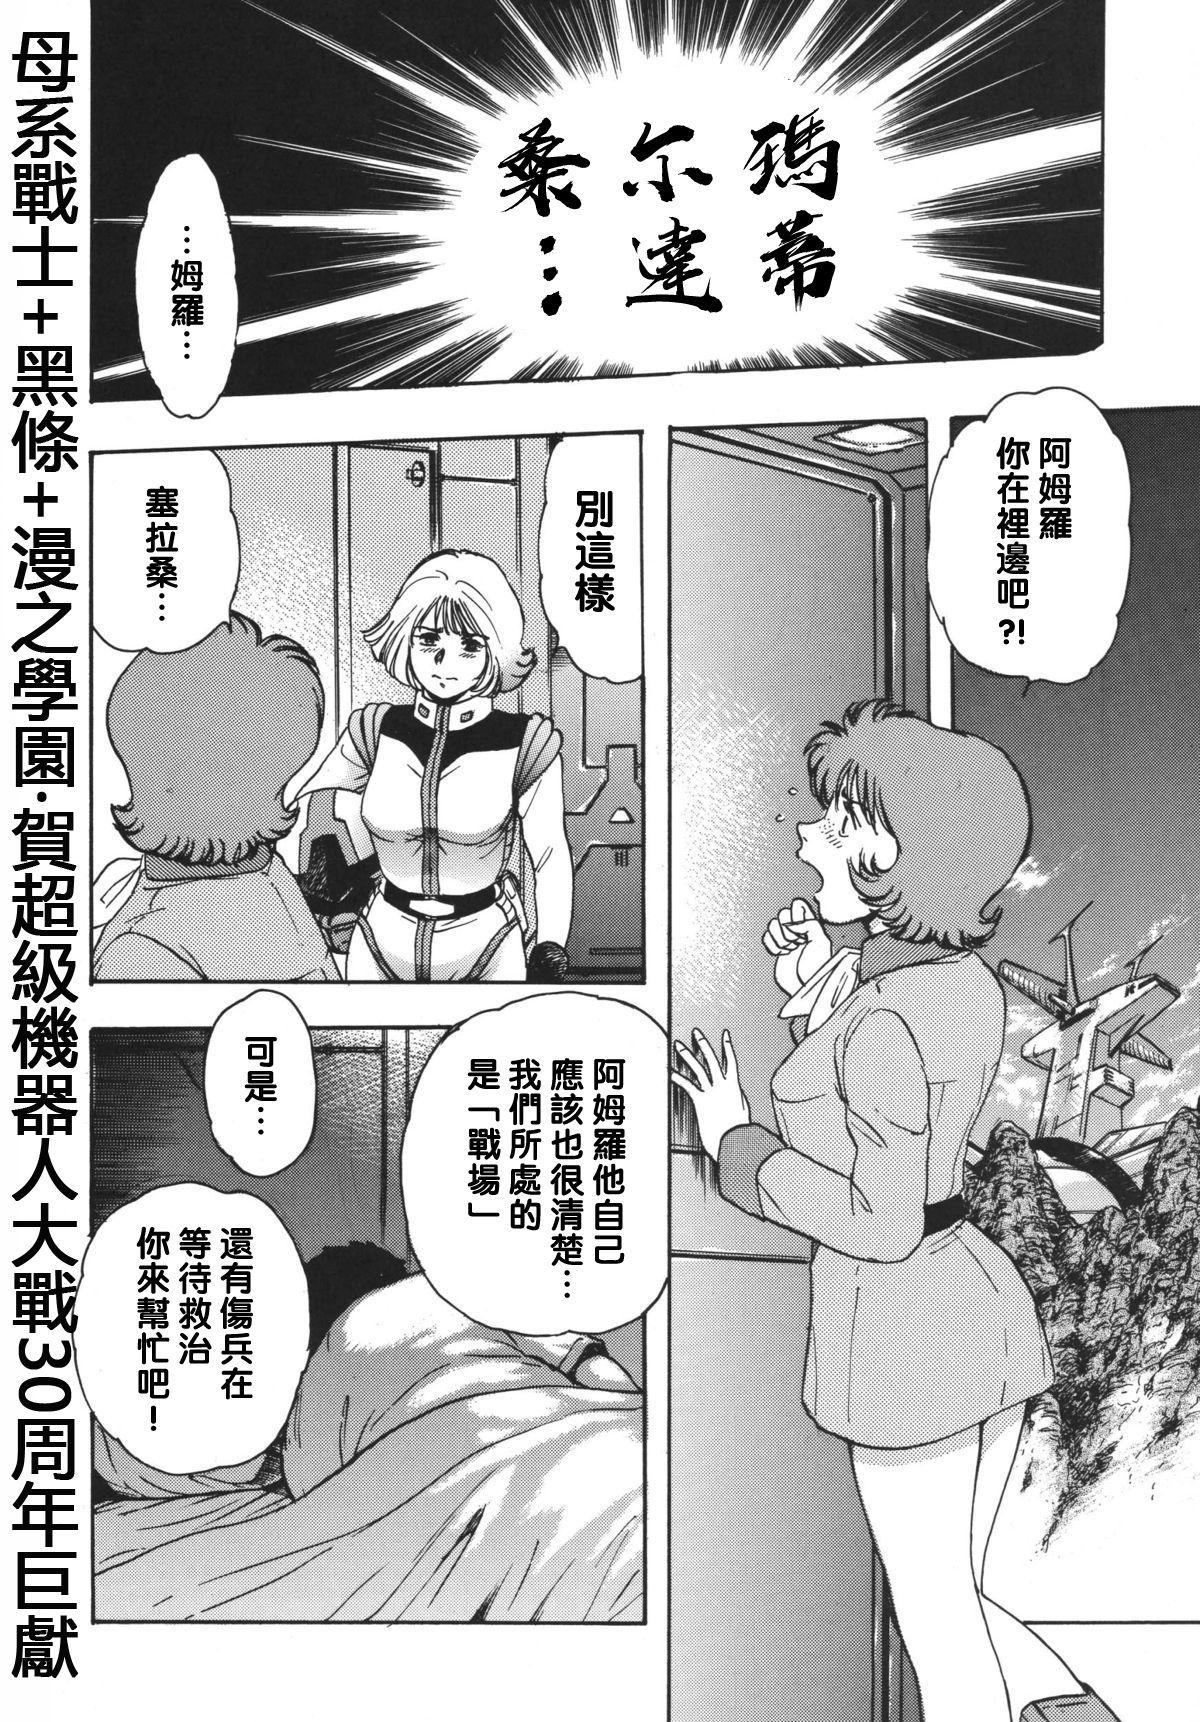 Nerd マチルタその愛夢 - Gundam Tia - Page 6